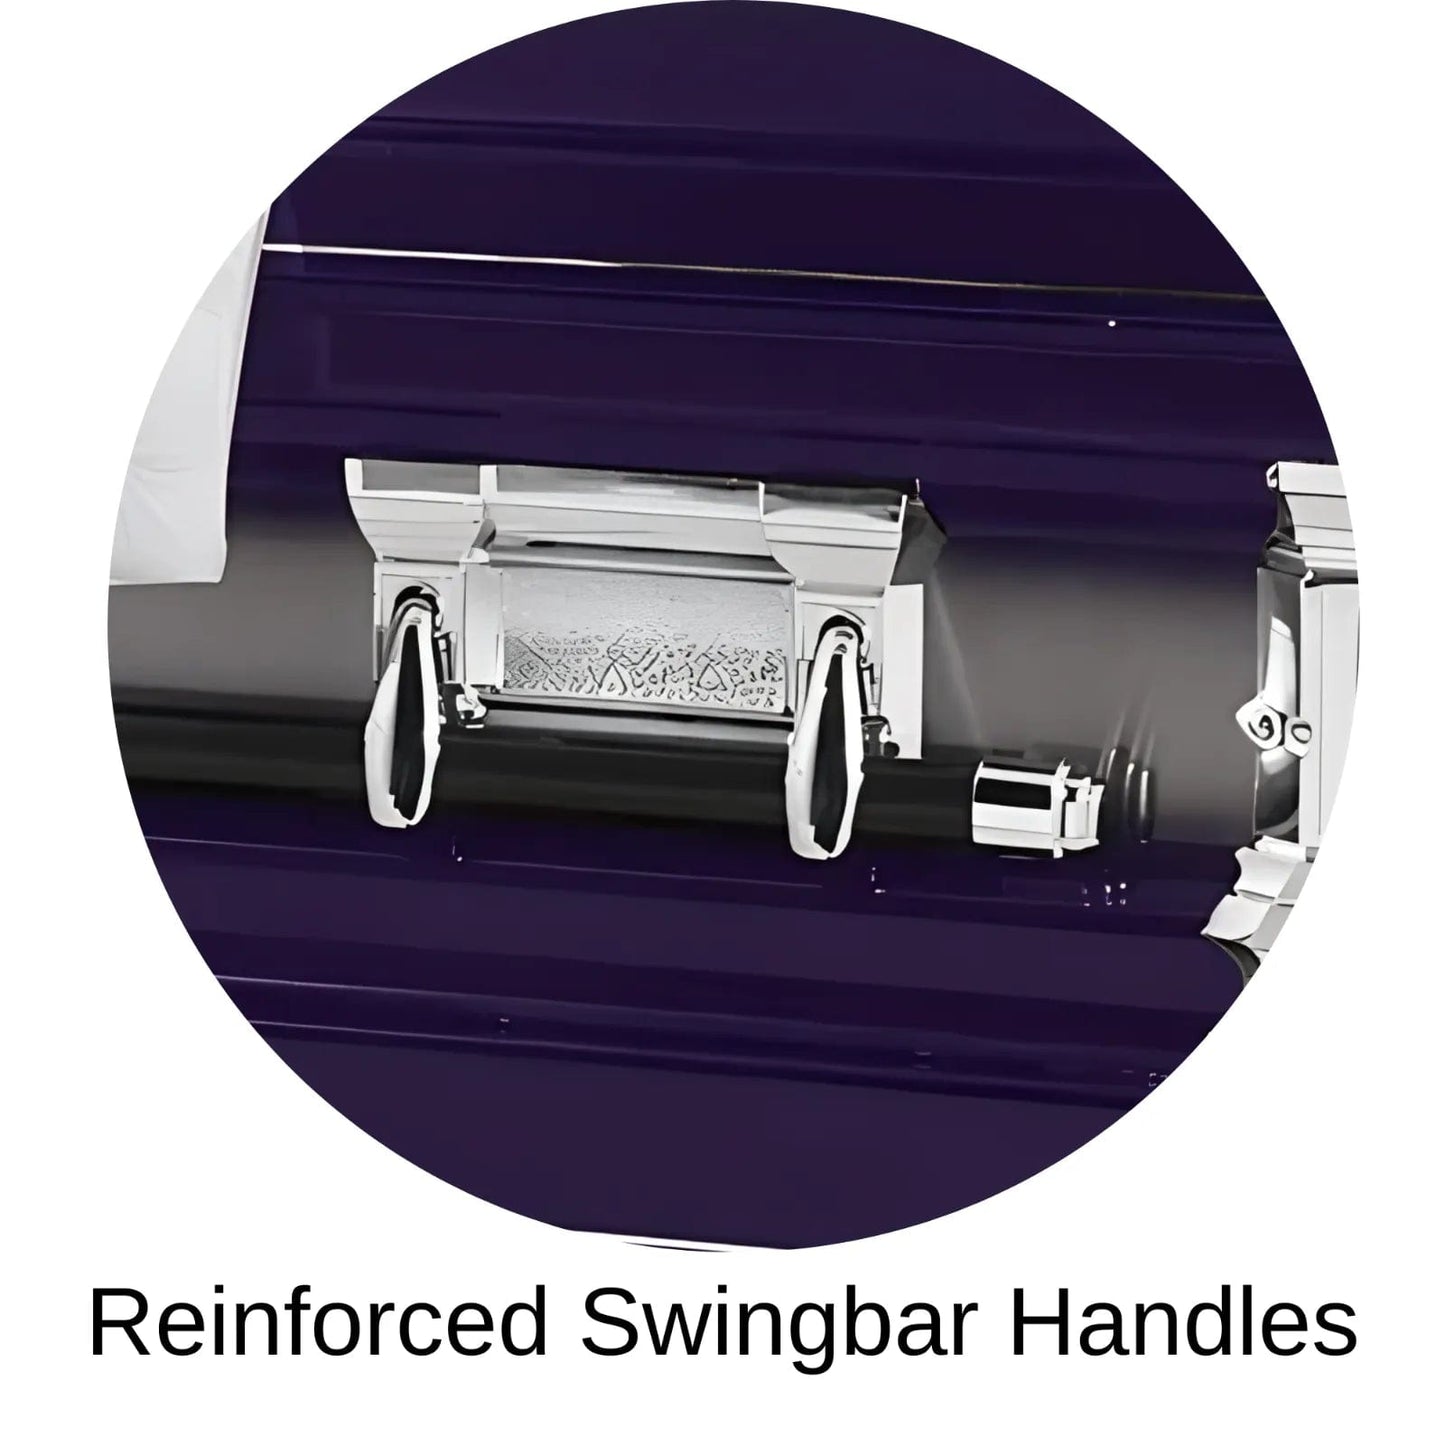 Reinforced Swingbar handles of Titan Casket Era Series Casket